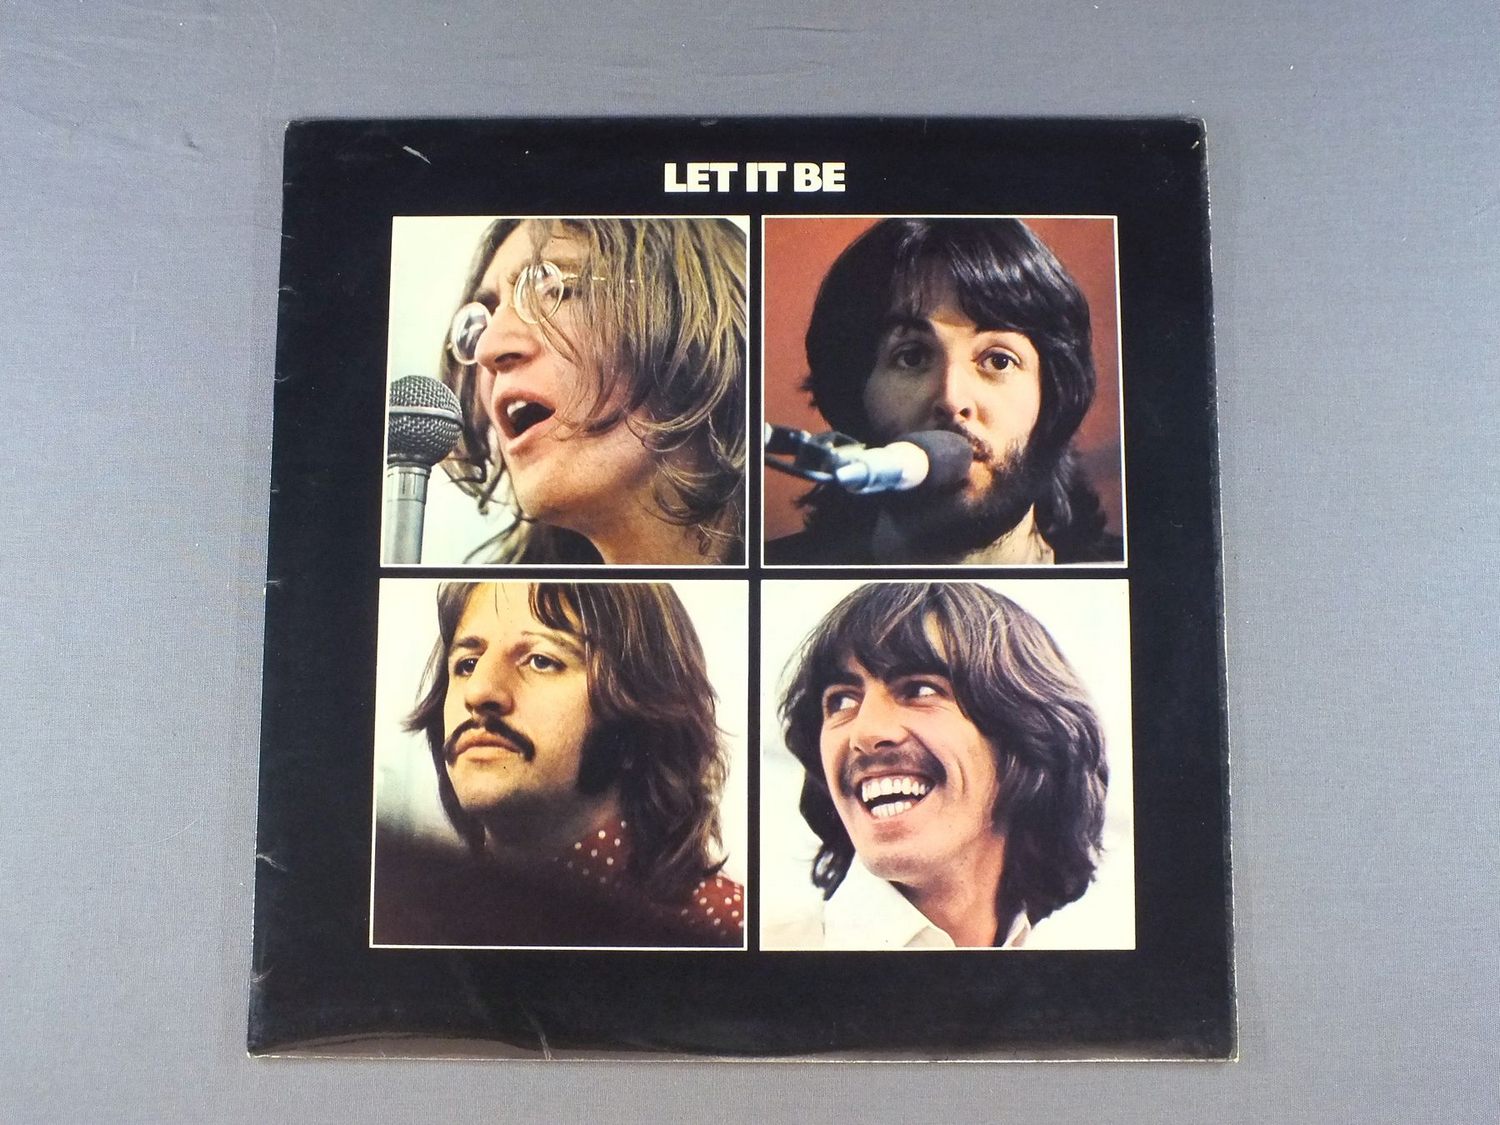 Песня лет ит би. Битлз 1970 Let it be. Обложка альбома Битлз Let it be. The Beatles Let it be 1970 обложка. Битлз 1970 Let it be в студии.